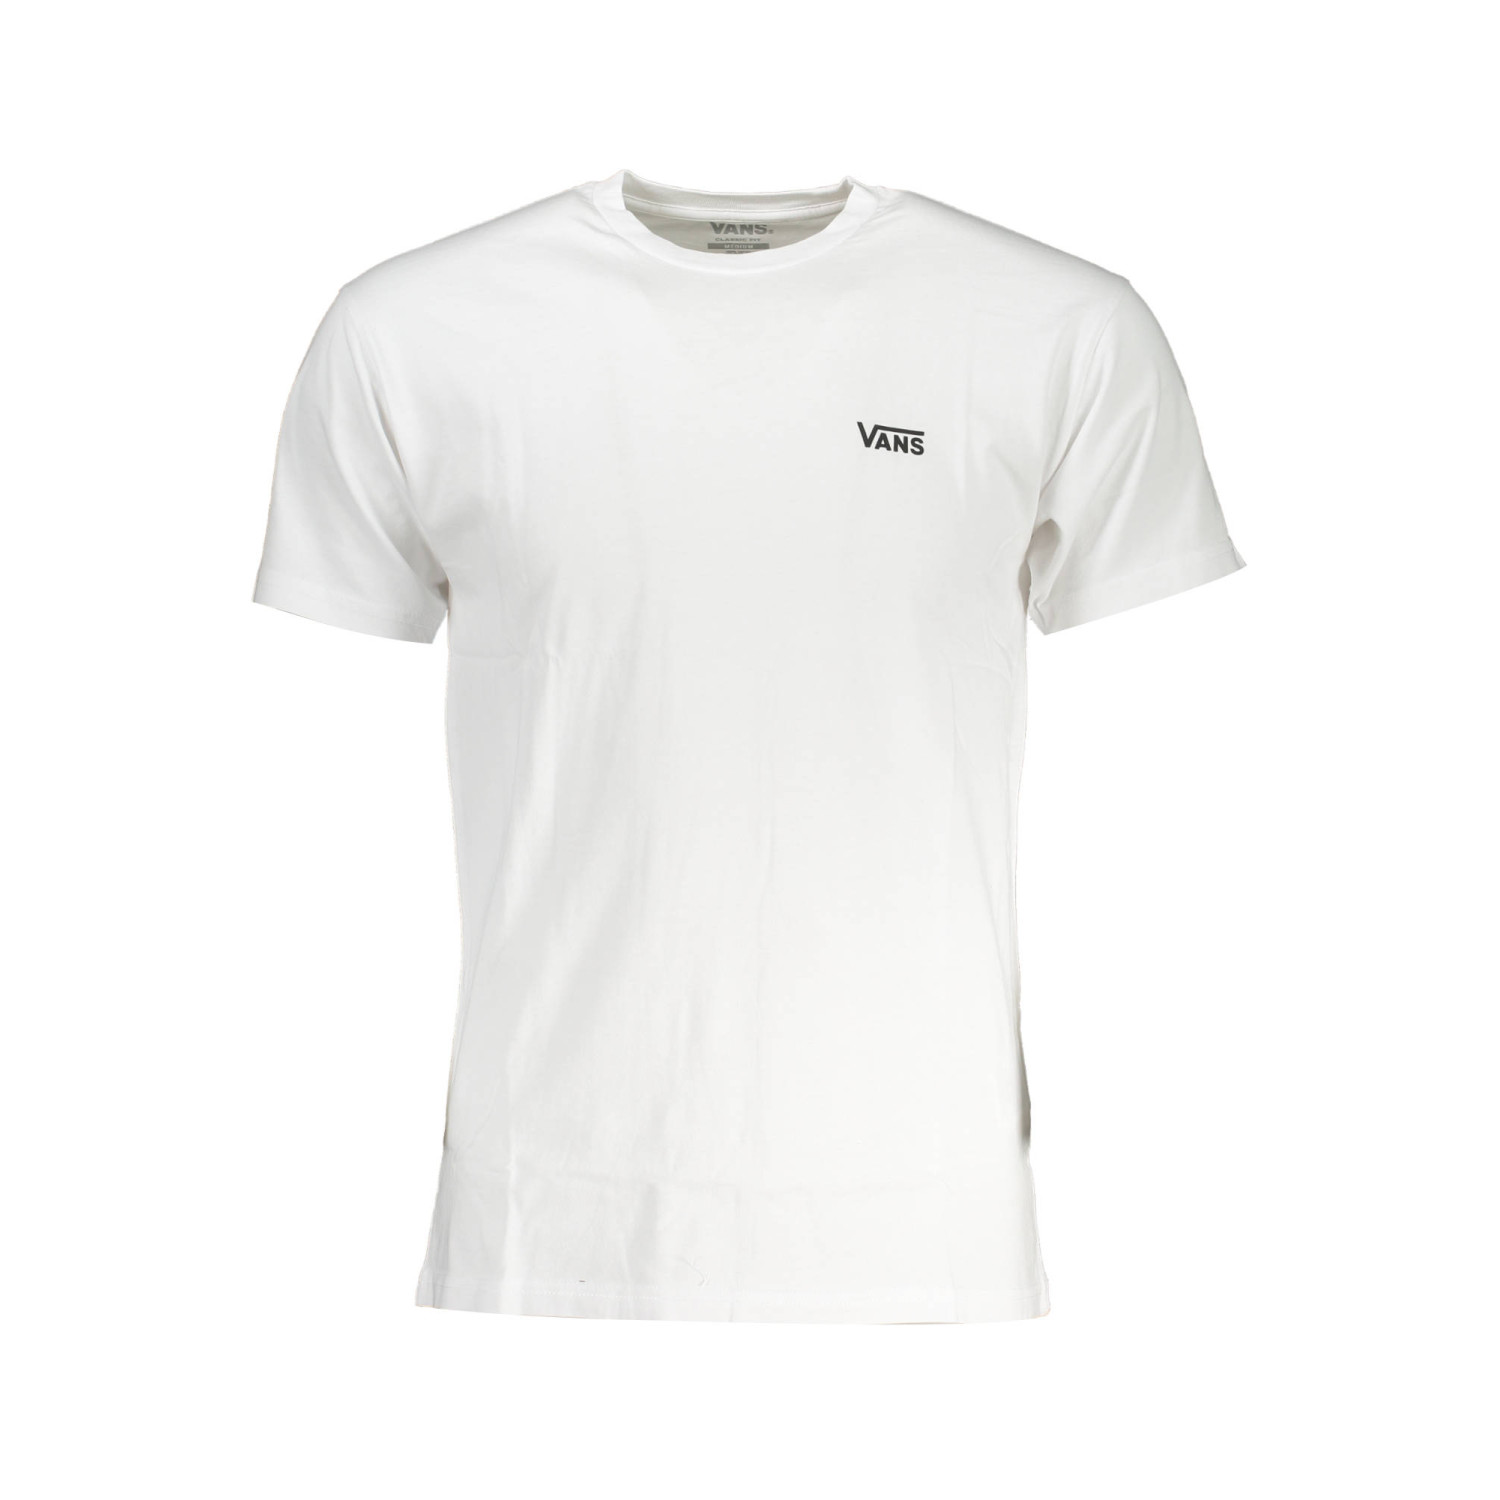 Pánske tričko Vans - biela